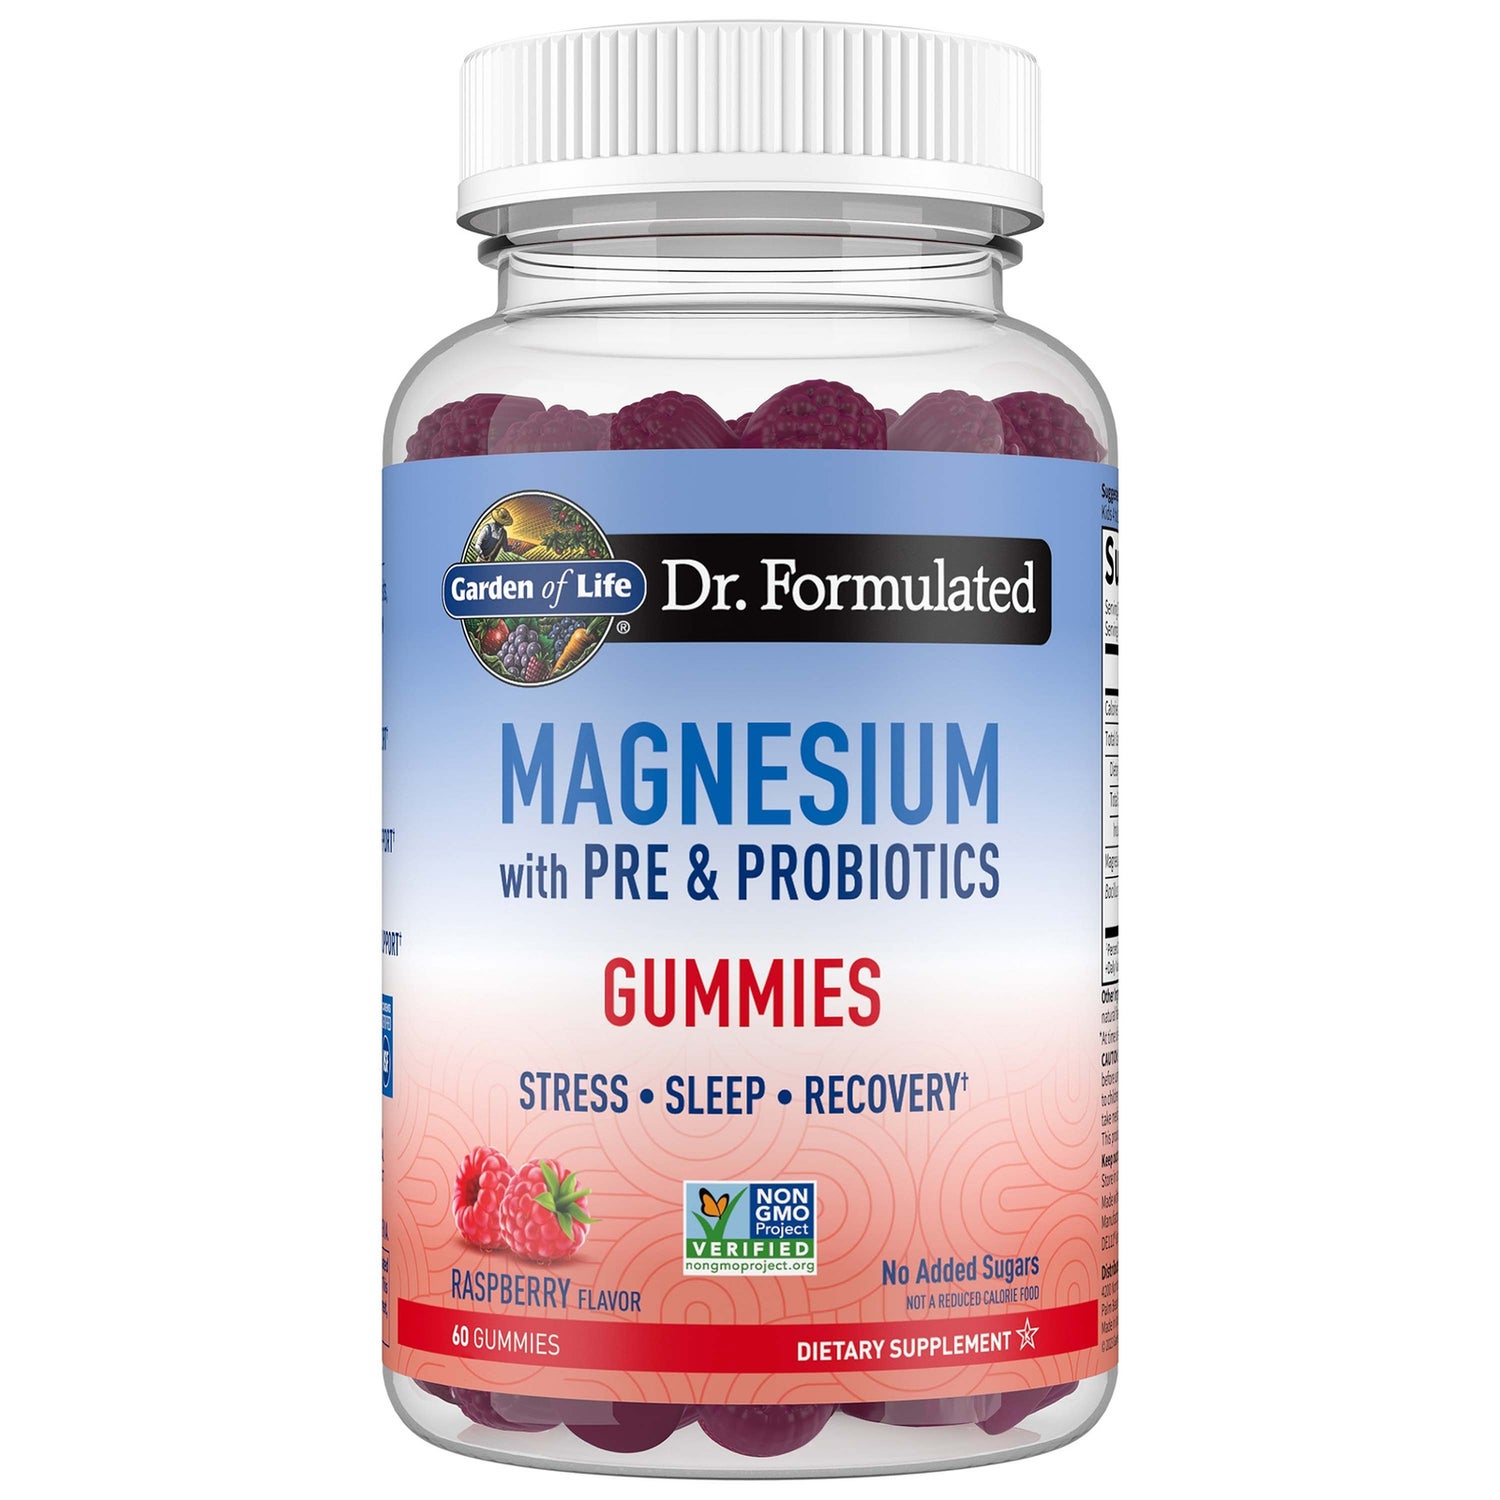 Garden of Life Dr Formulated Magnesium Raspberry Gummies with Pre & Probiotics